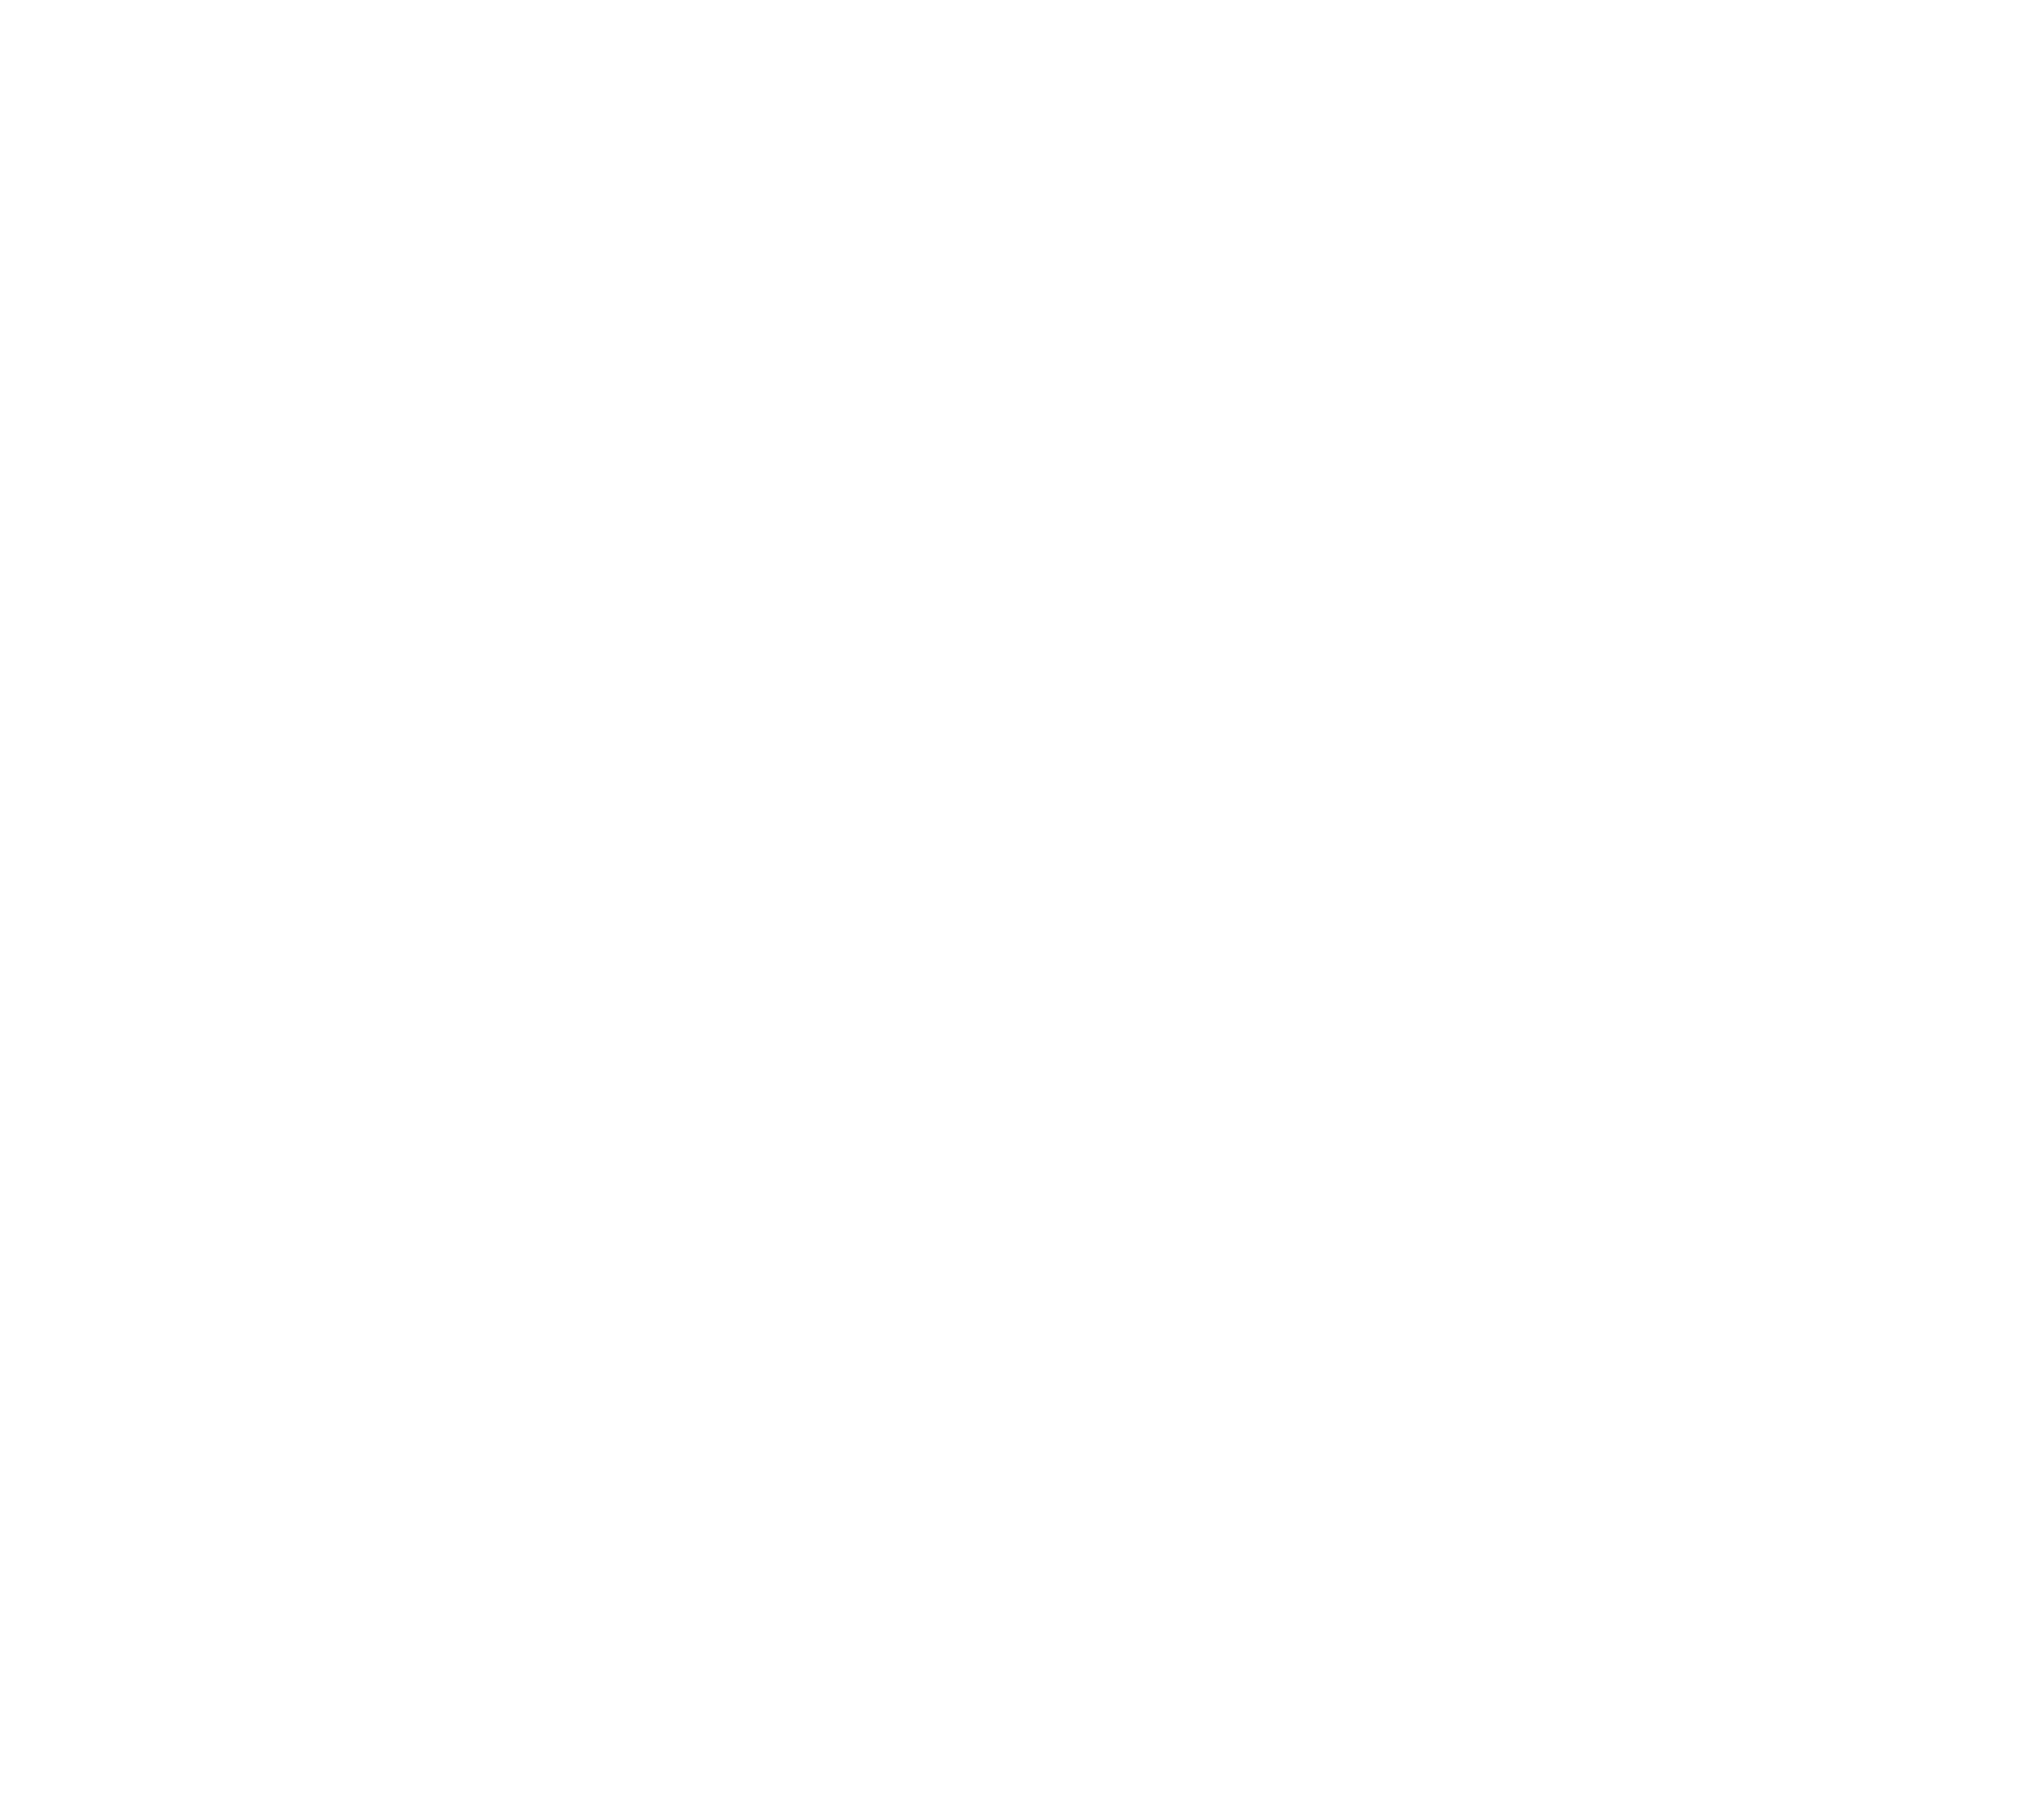 Benefit Professionals, Inc.